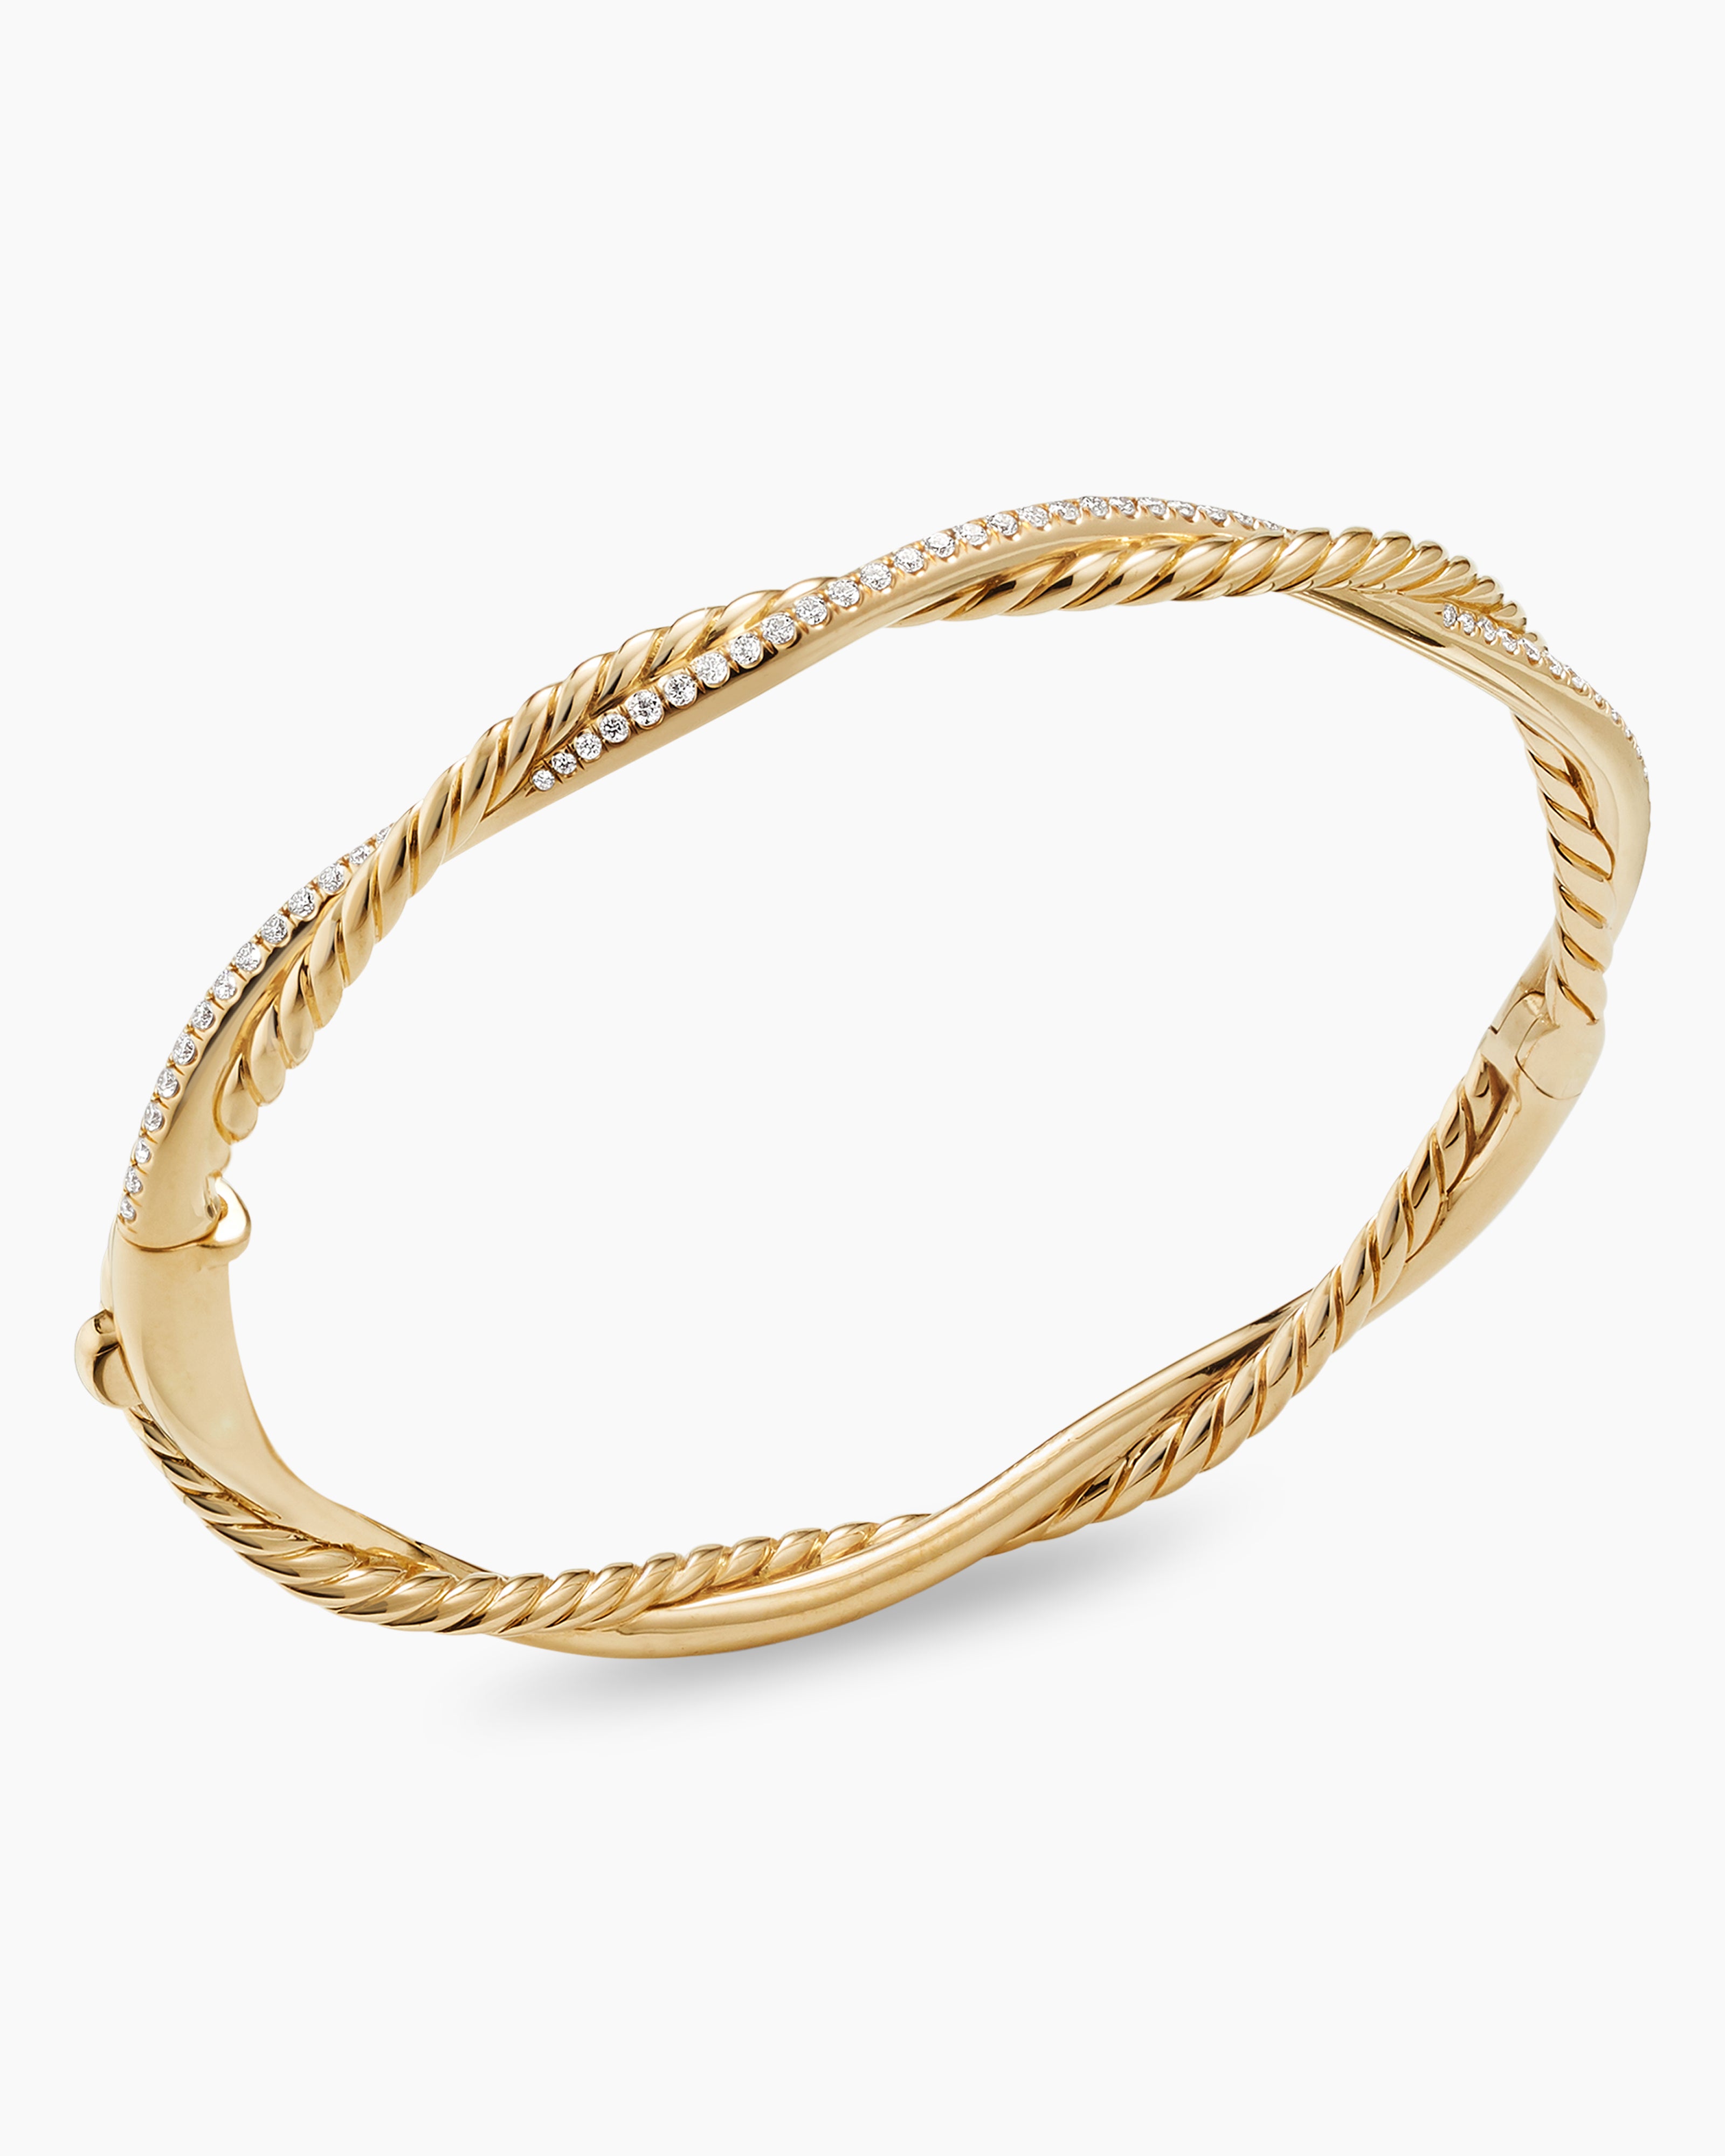 Macy's Men's Cubic Zirconia Curb Link Chain Bracelet in 14k Gold-Plated  Sterling Silver - Macy's